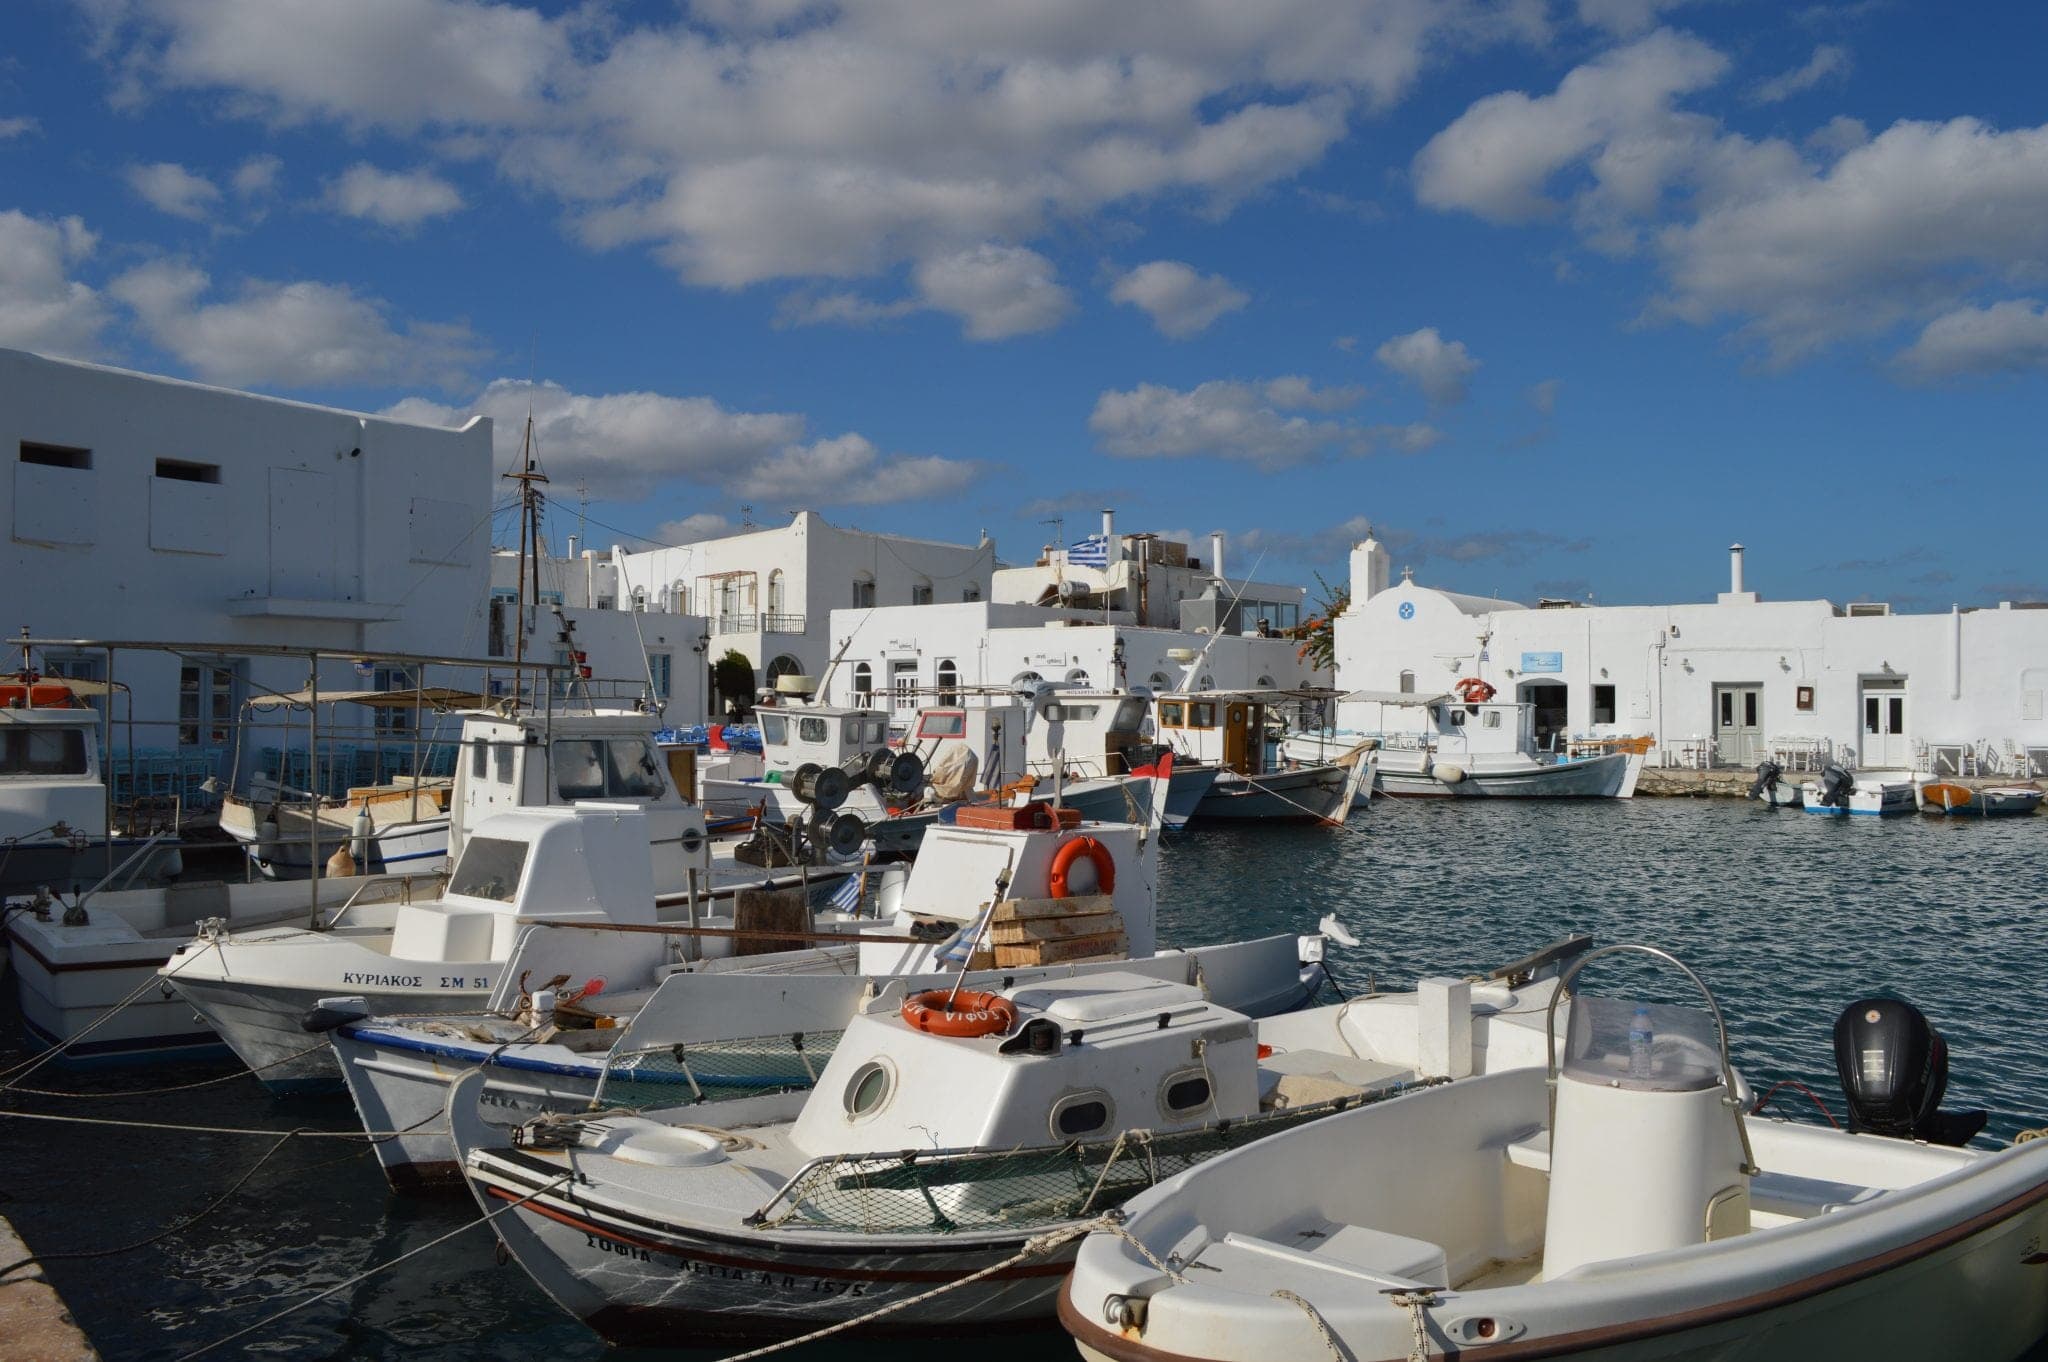 Honeymoon in the Greek Islands | Paros, Santorini and Crete | www.LisaSamuel.com